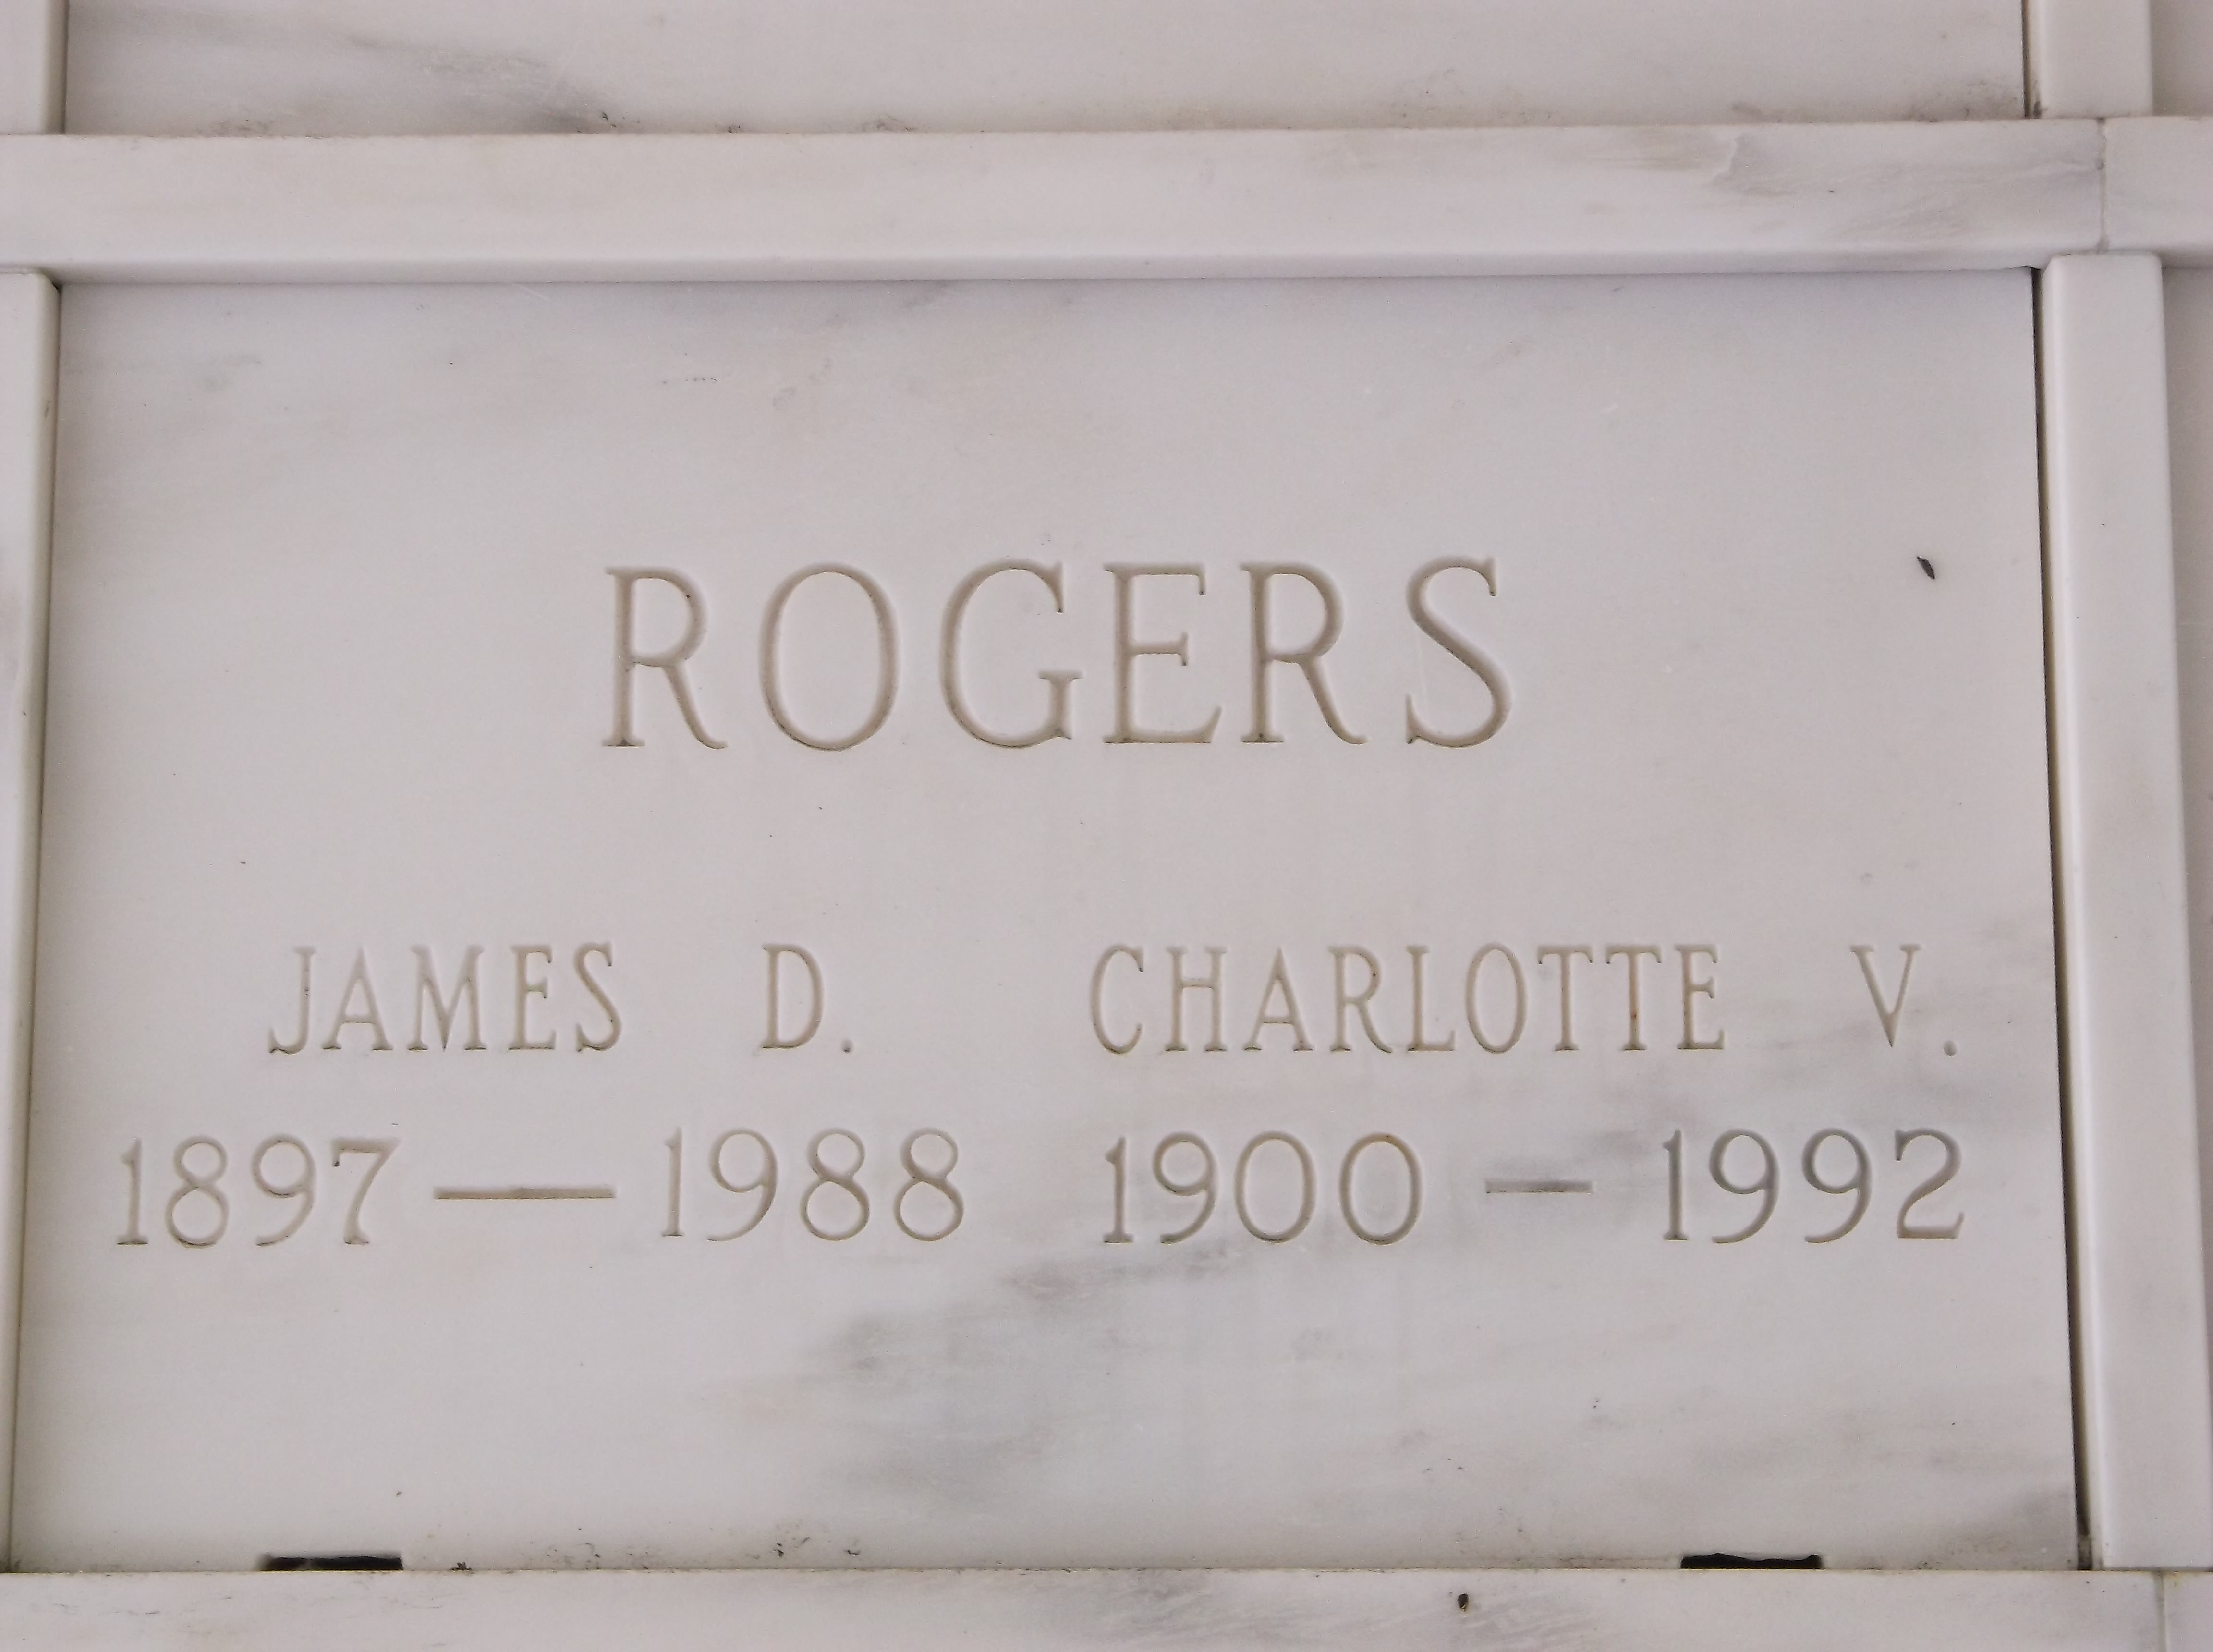 James D Rogers